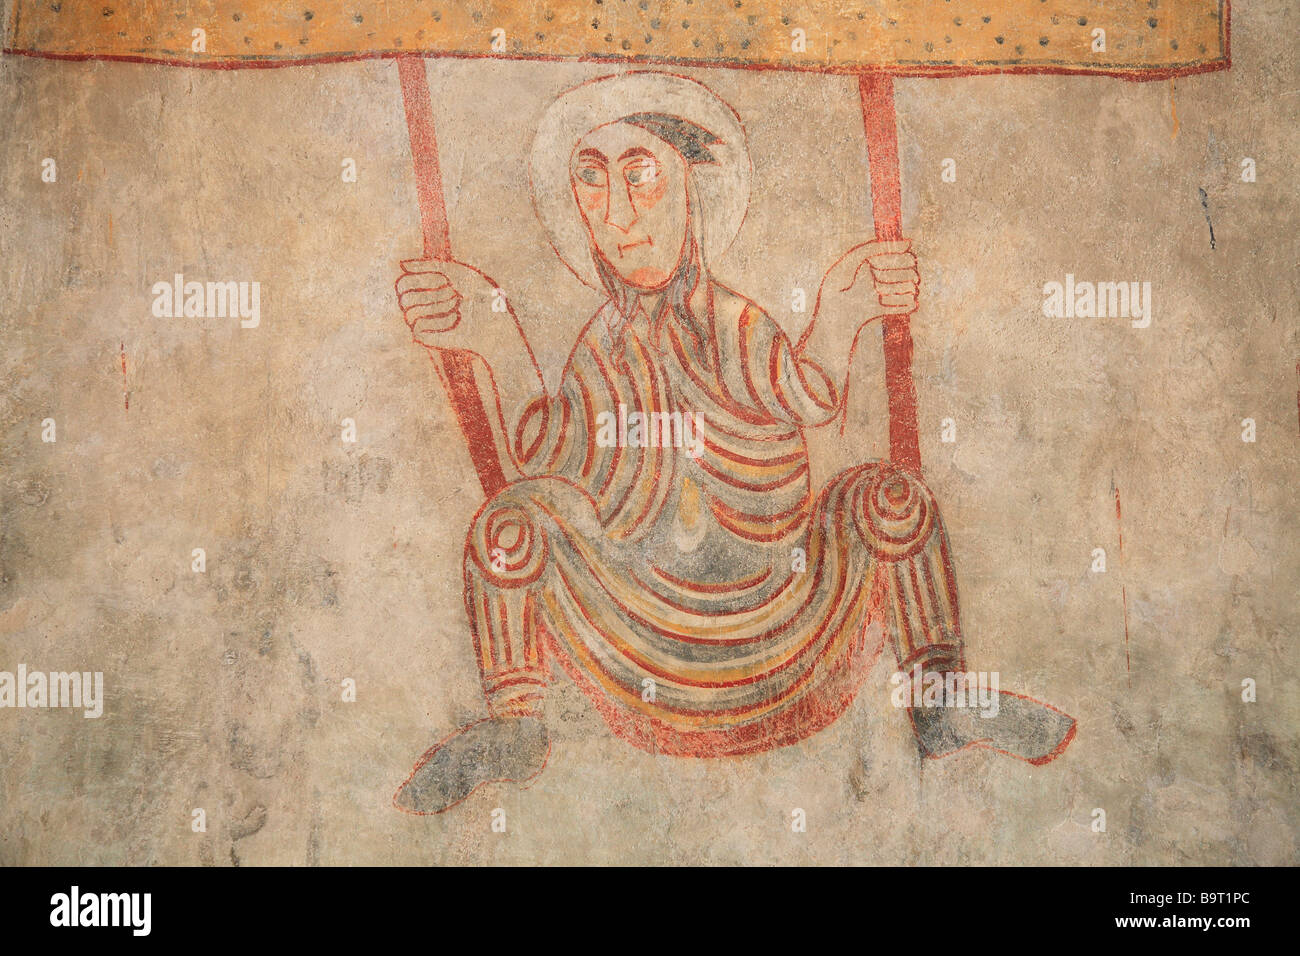 Fresco Paintings In The 11 Century Stock Photos & Fresco Paintings ...